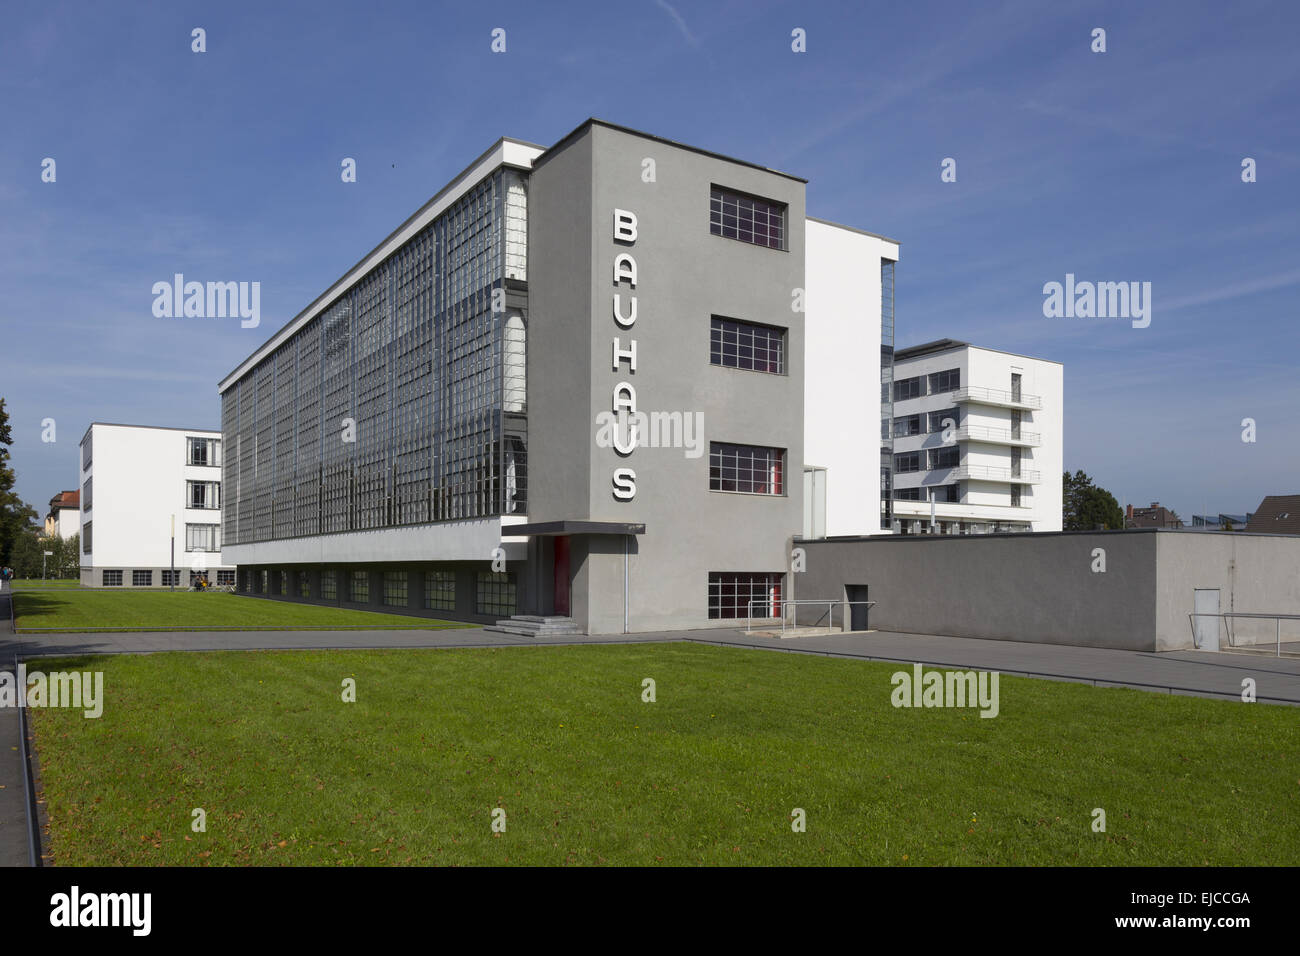 Logotipo de Bauhaus Foto de stock